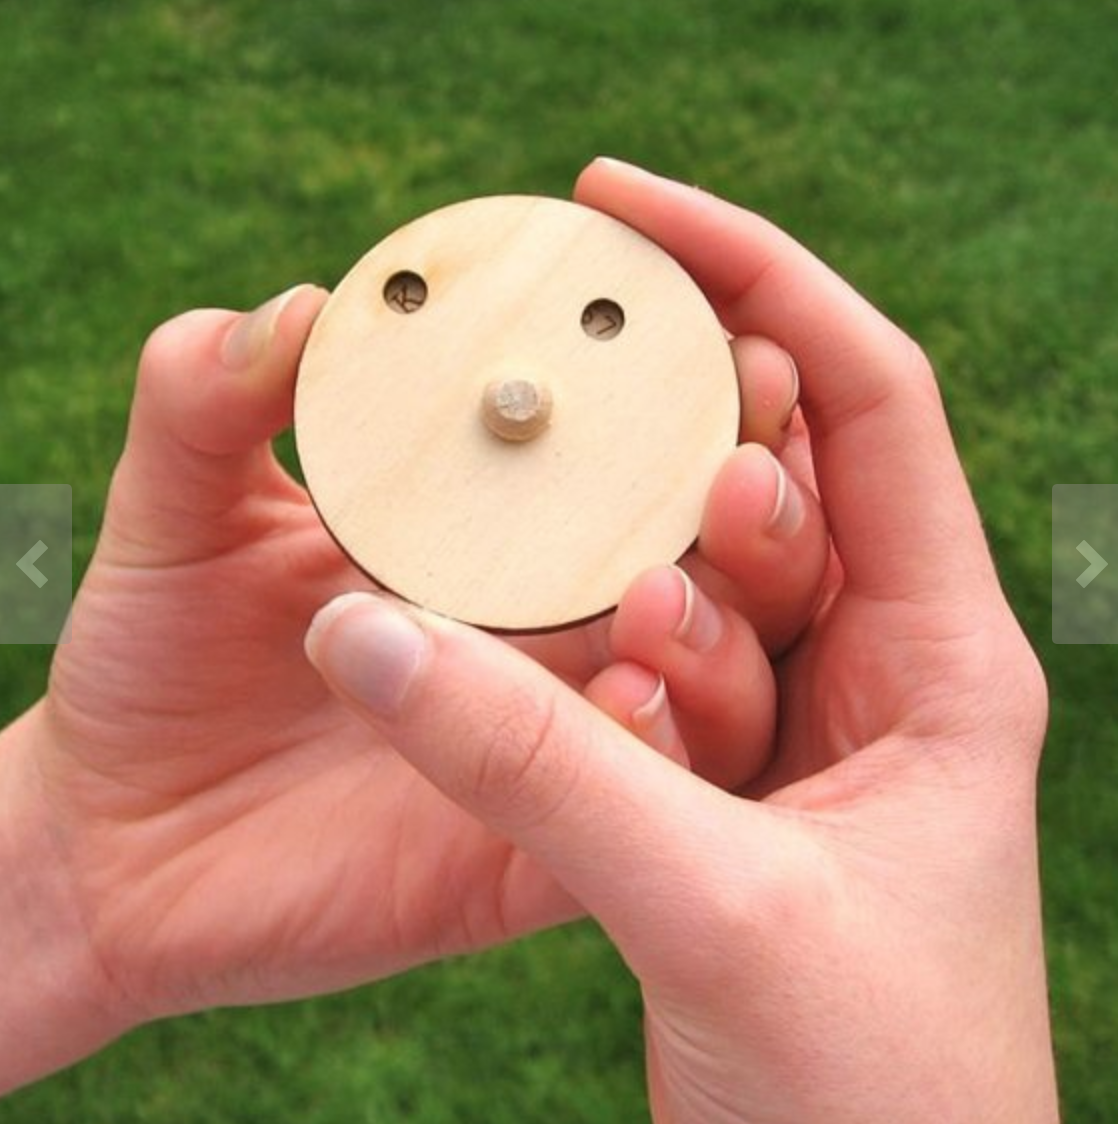 Wood Toy Secret Decoder Disk - Spy Gadget